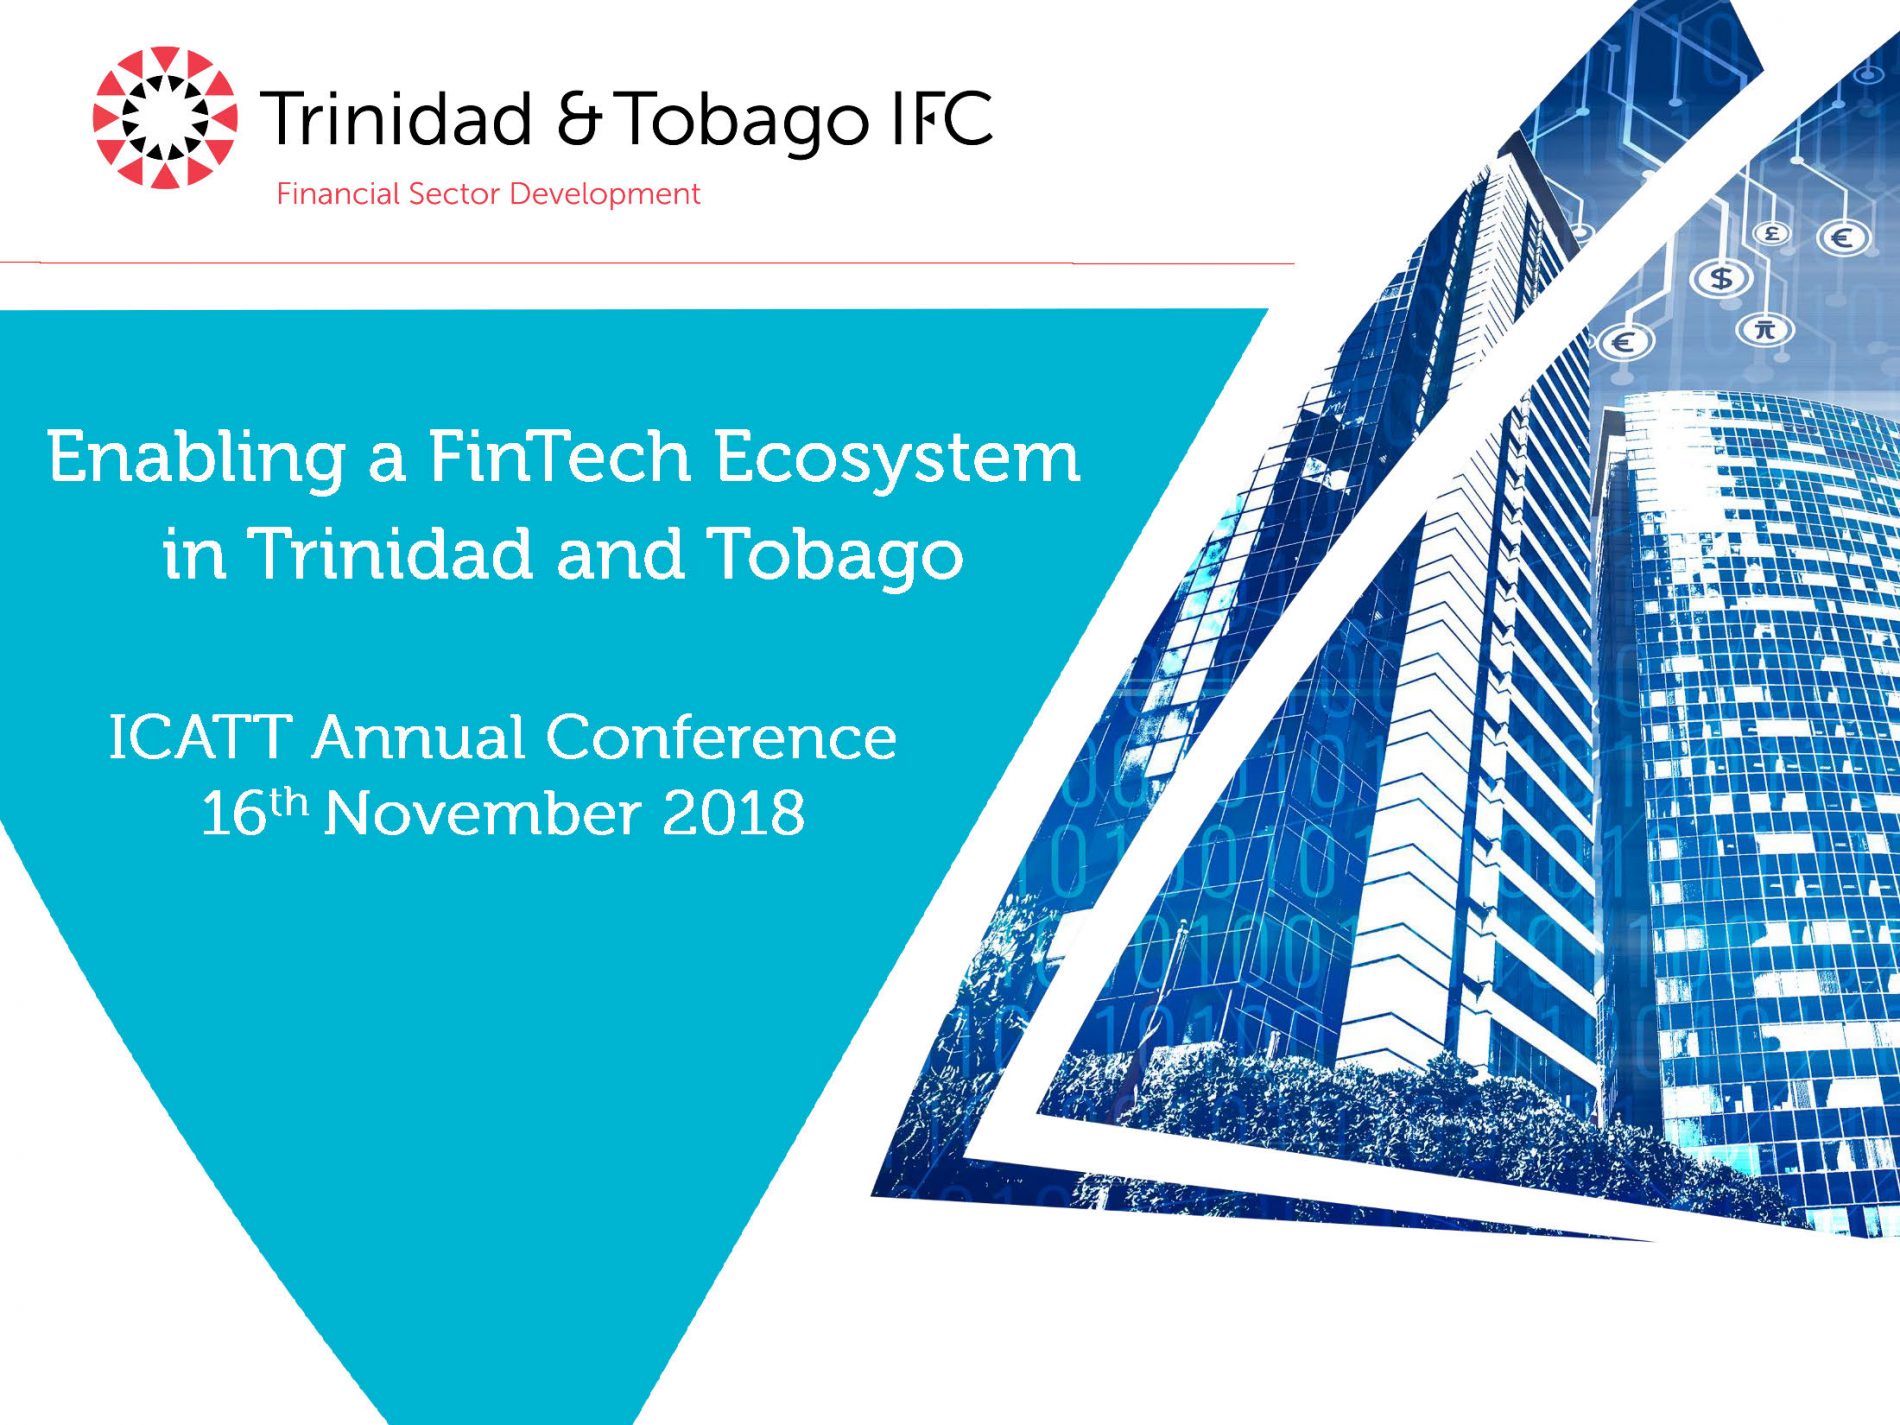 Enabling A FinTech Ecosystem in Trinidad and Tobago – CEO Presentation at ICATT